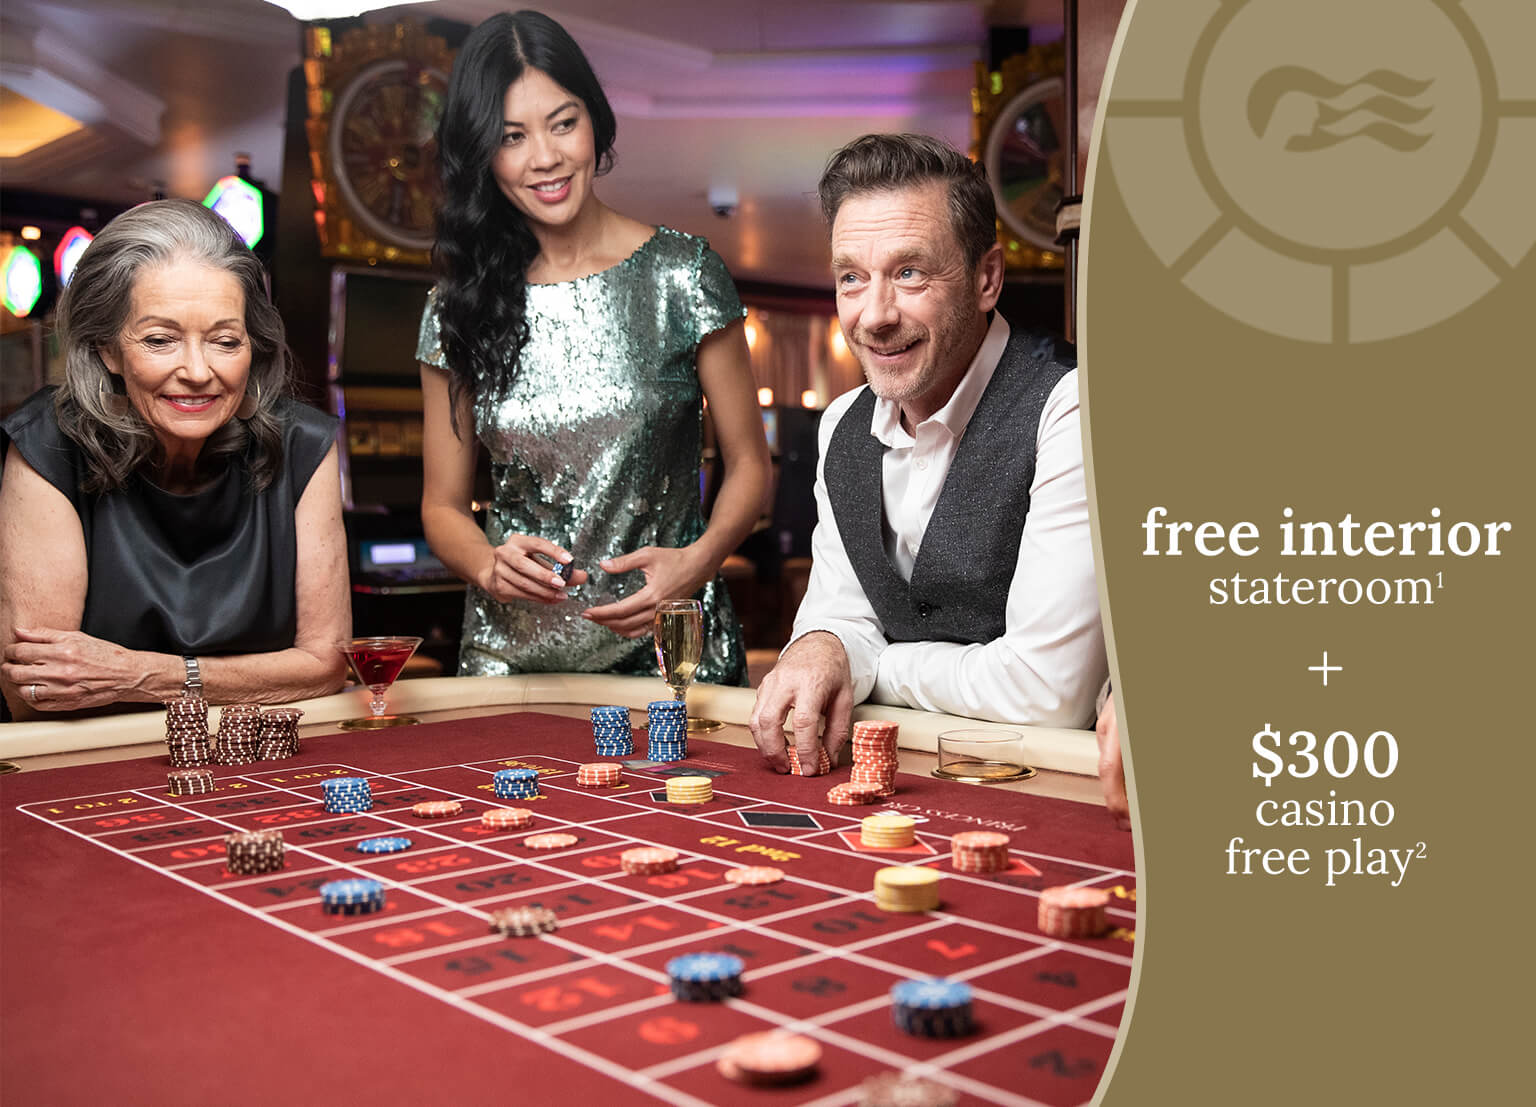 free interior stateroom(1) + $300 casino free play(2)